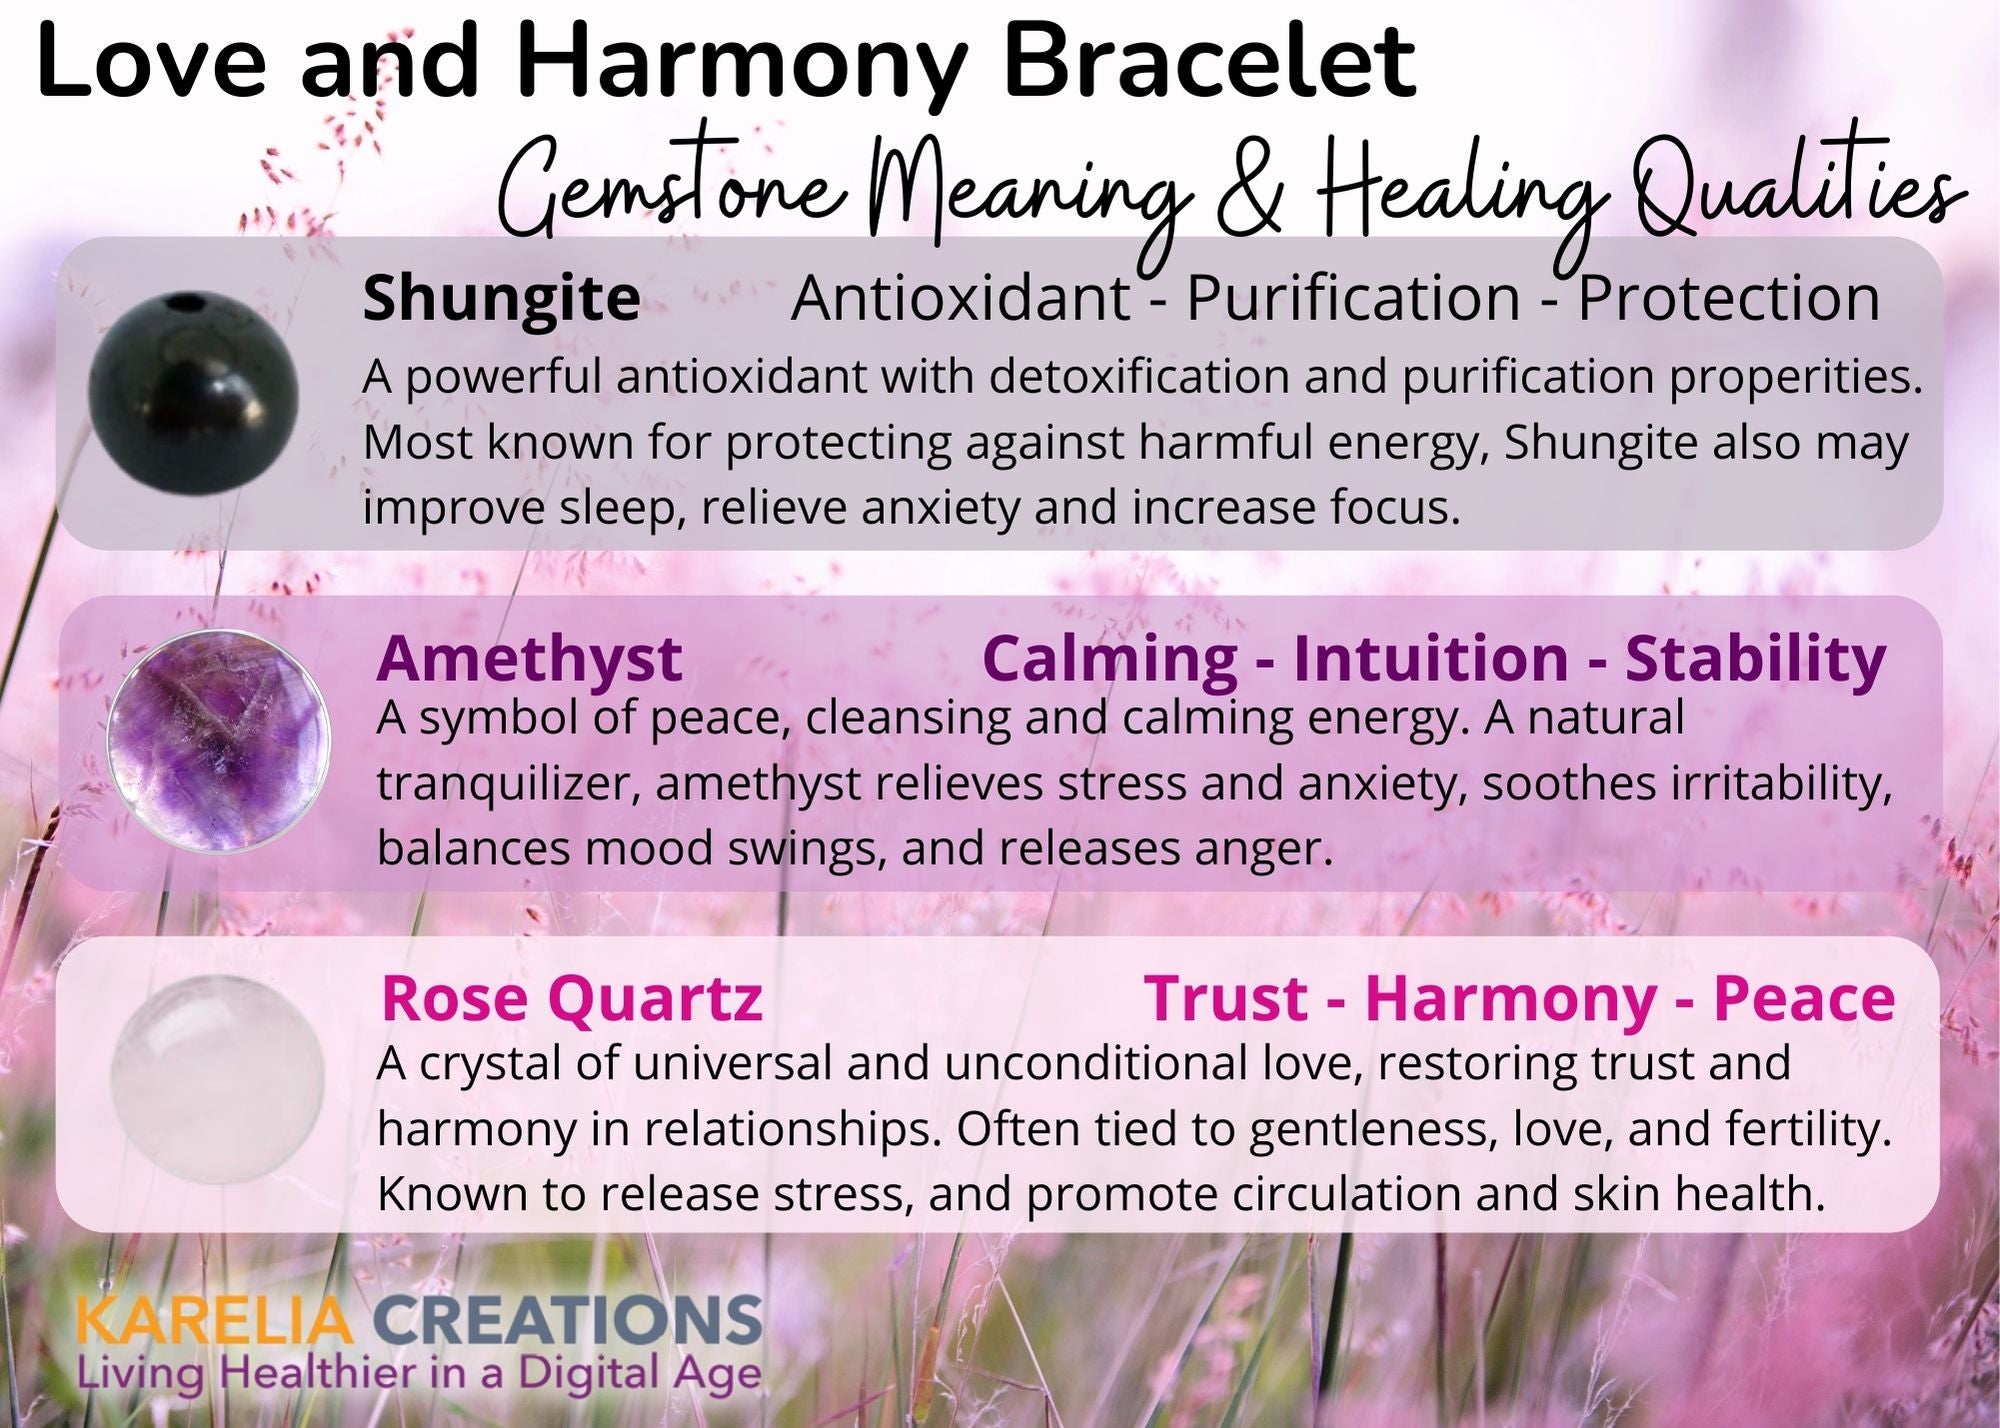 Love, Harmony and Bracelet - Shungite Amethyst Pink Quartz Austrian Crystals